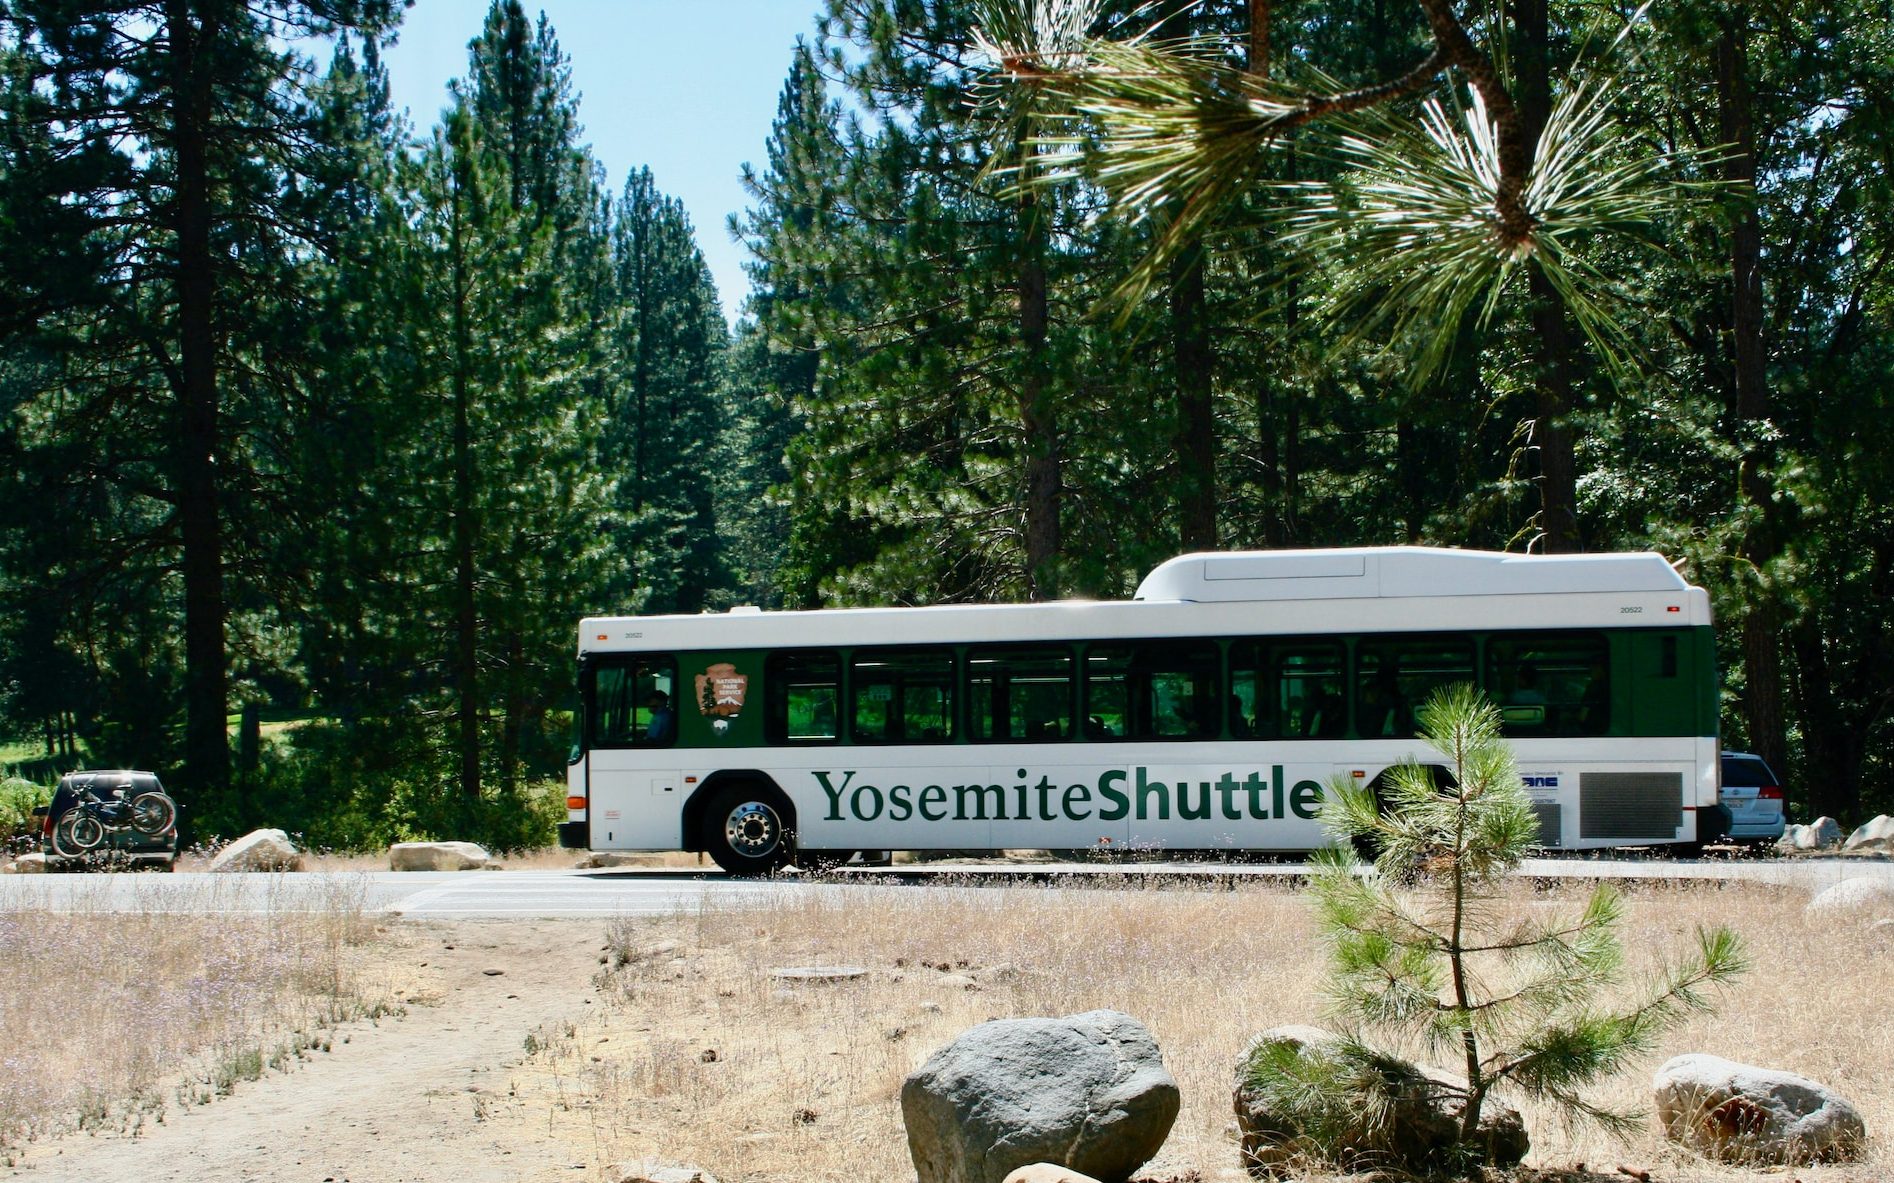 Yosemite Shuttle bus edited